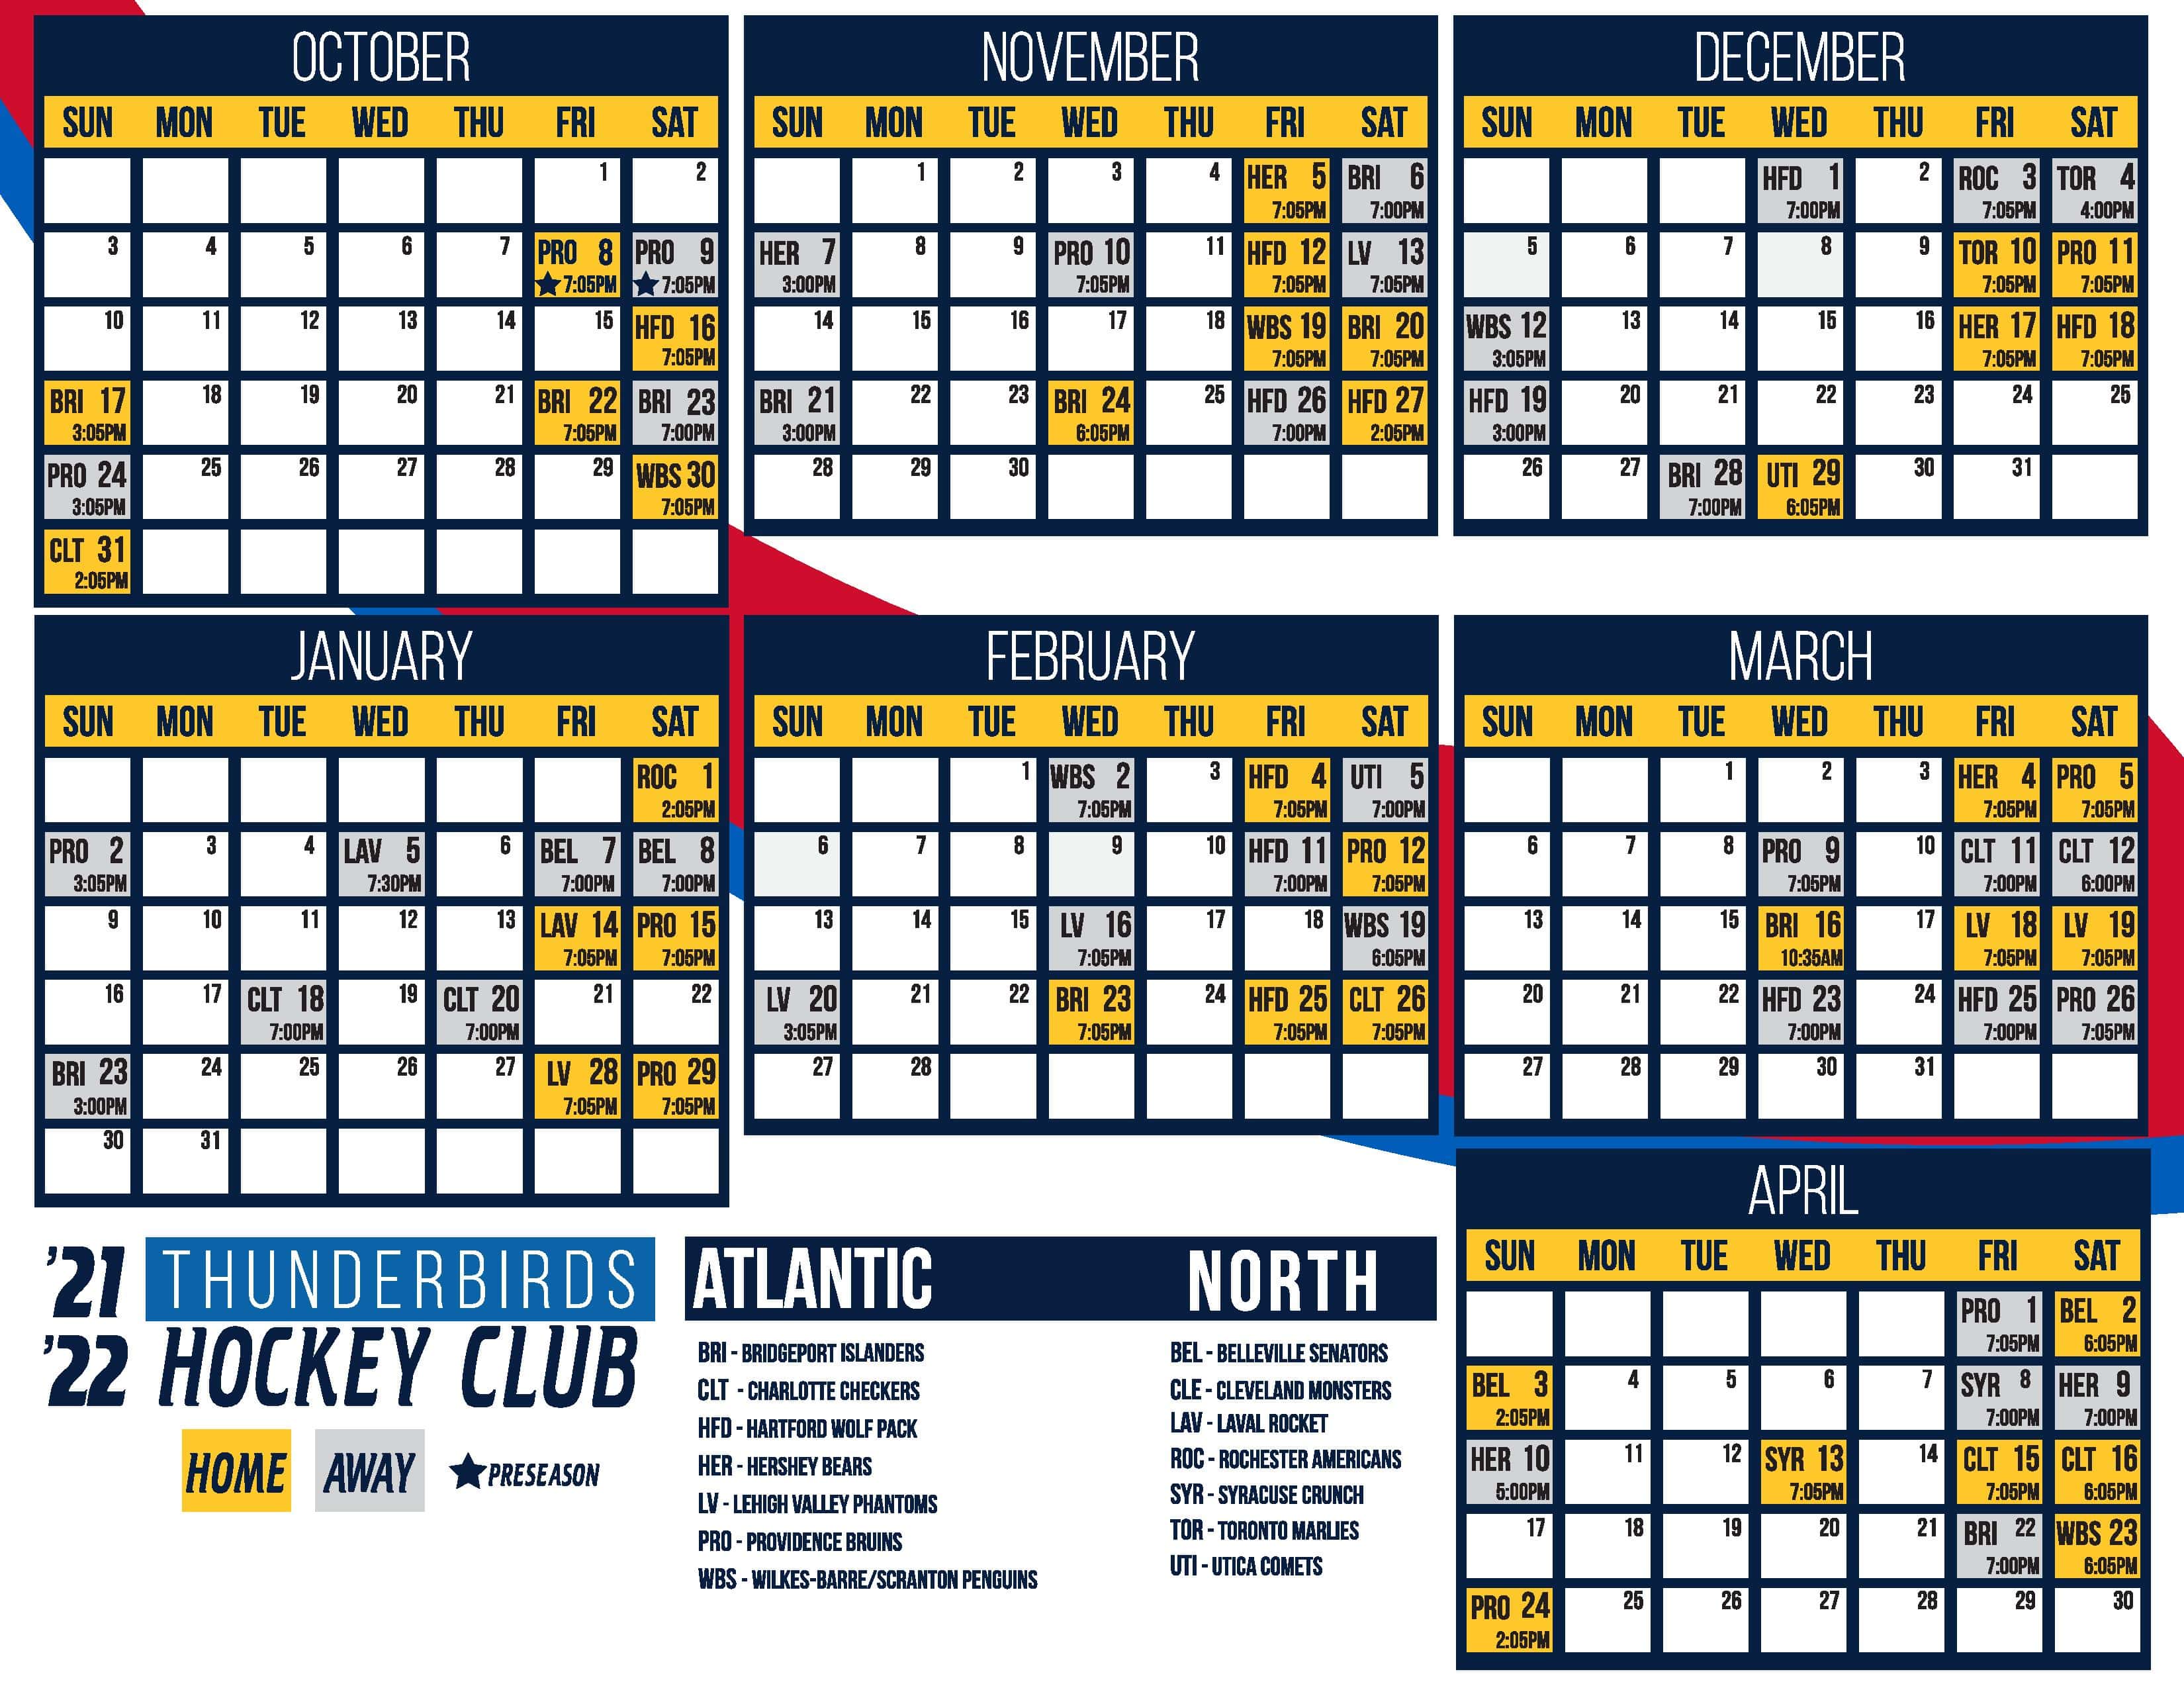 Seattle Kraken releases full schedule for 2021-22 NHL season